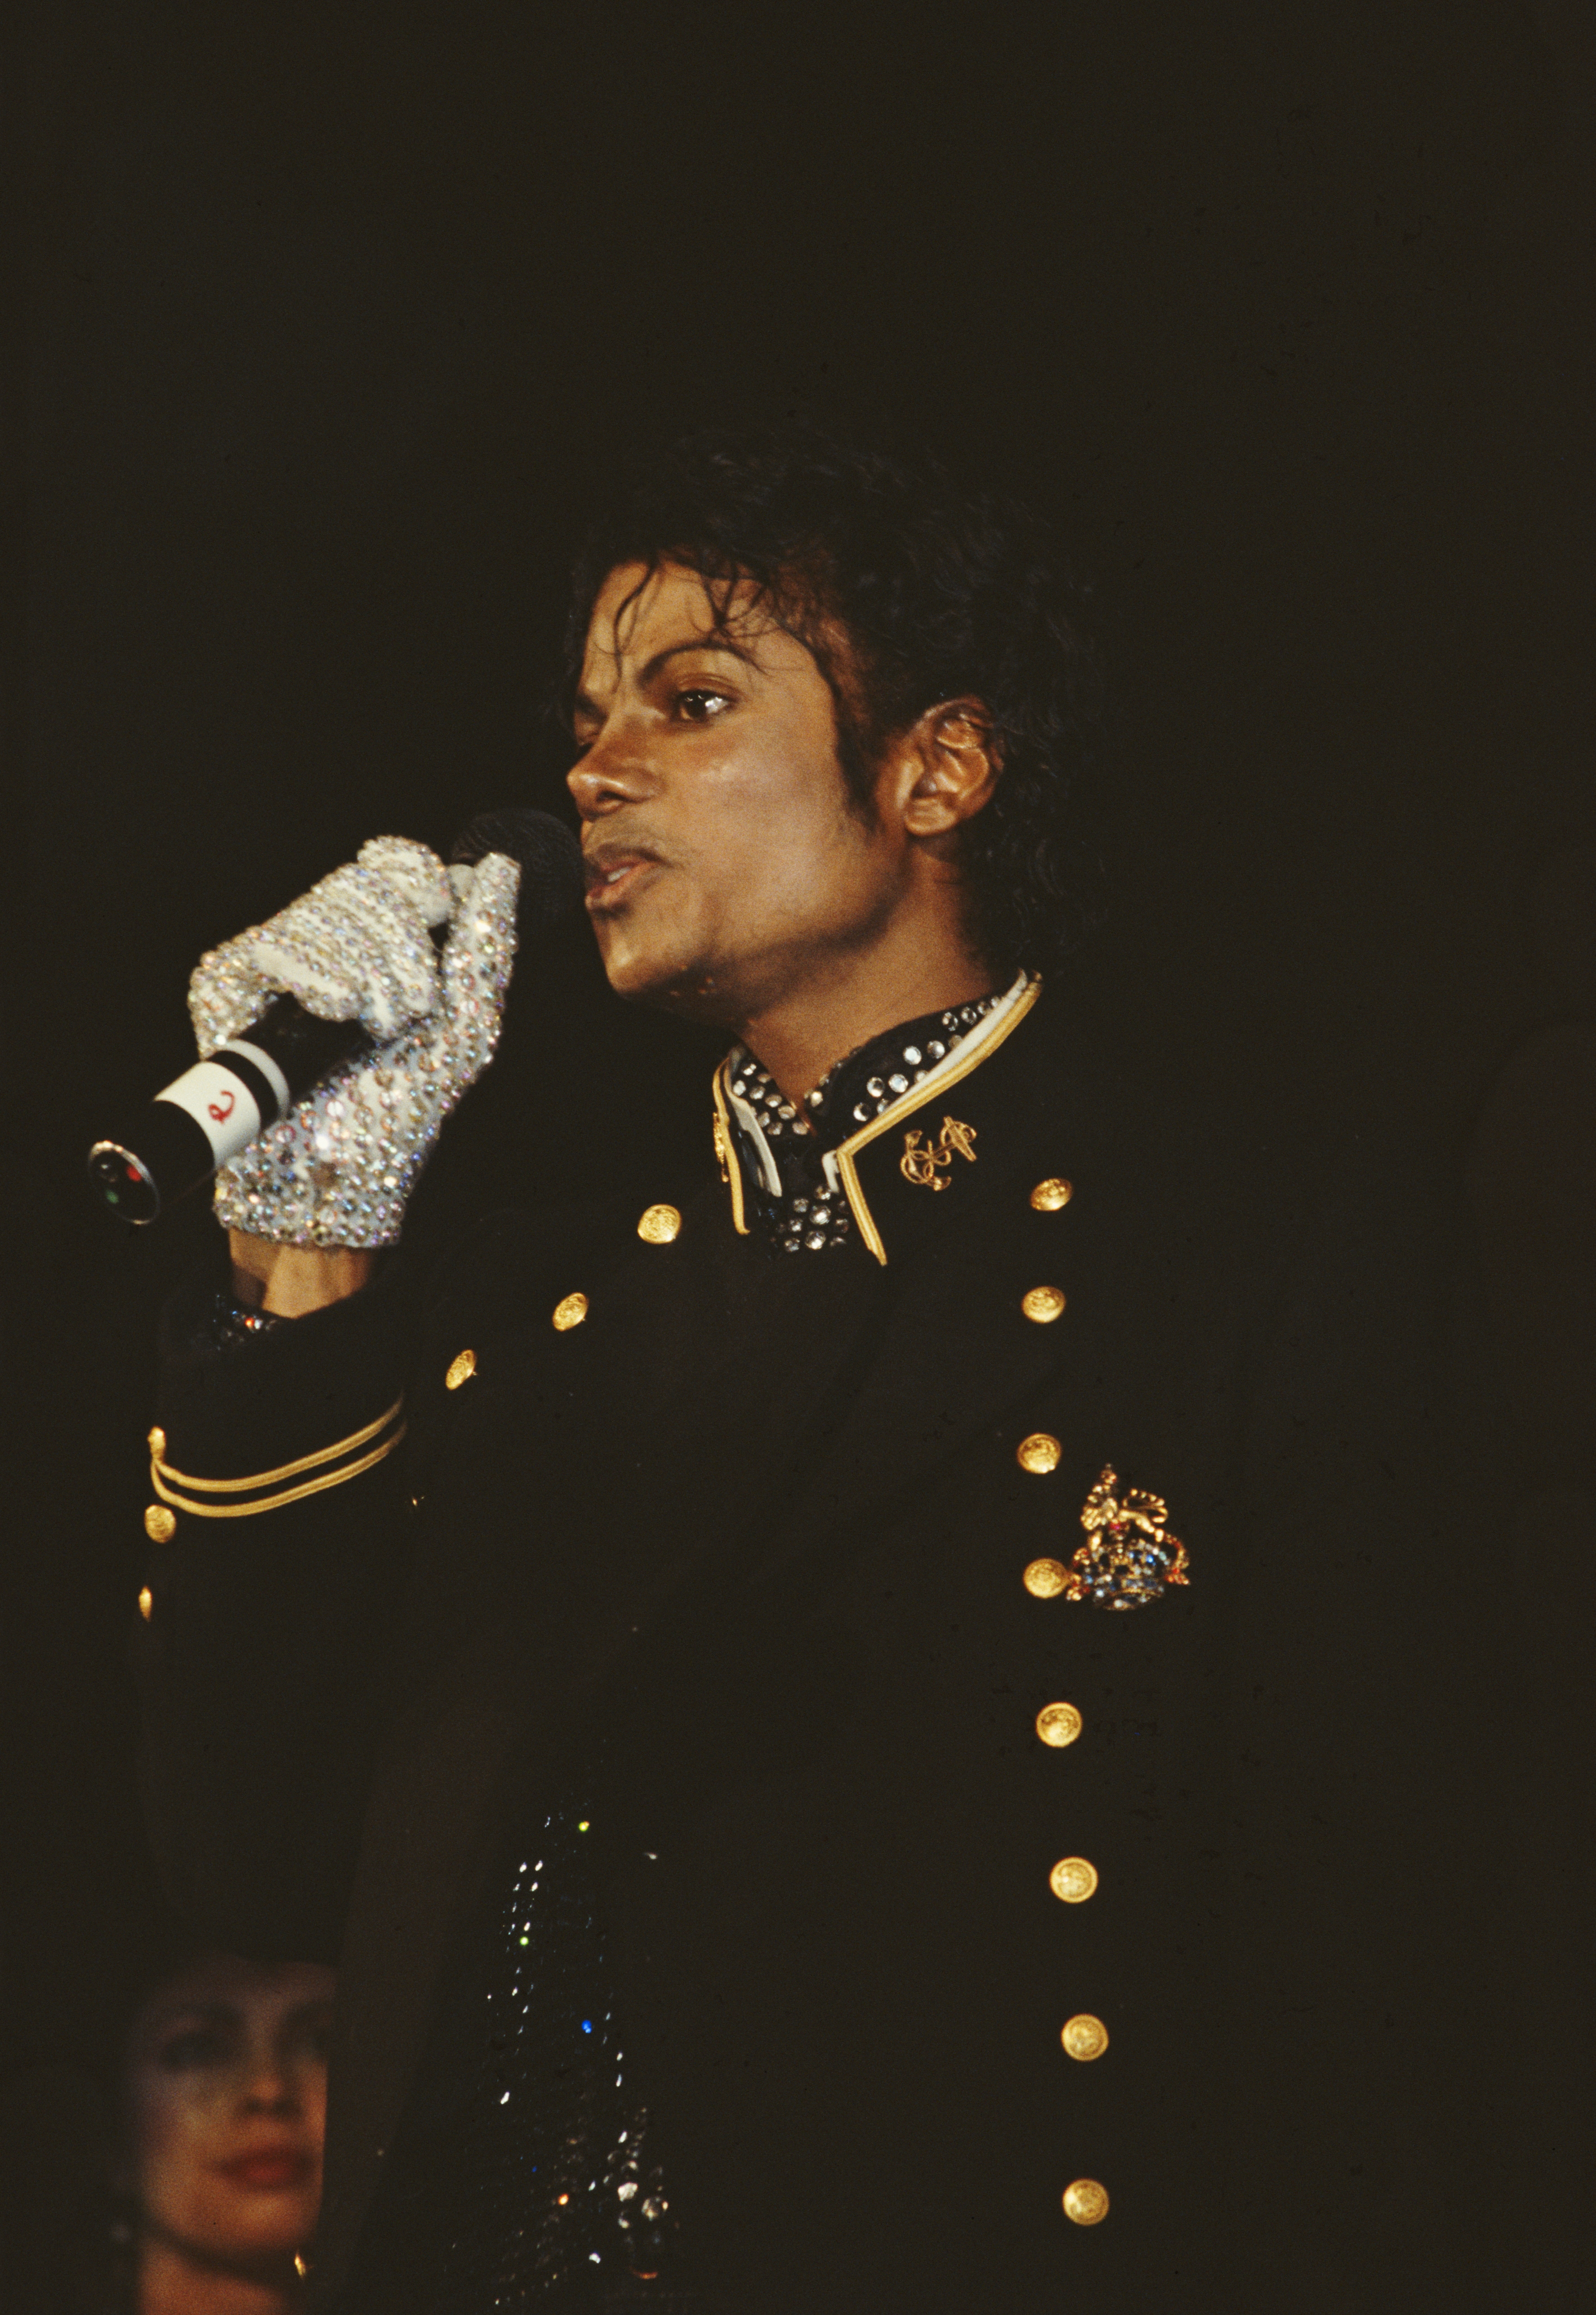 Michael Jackson's iconic white glove covered something up